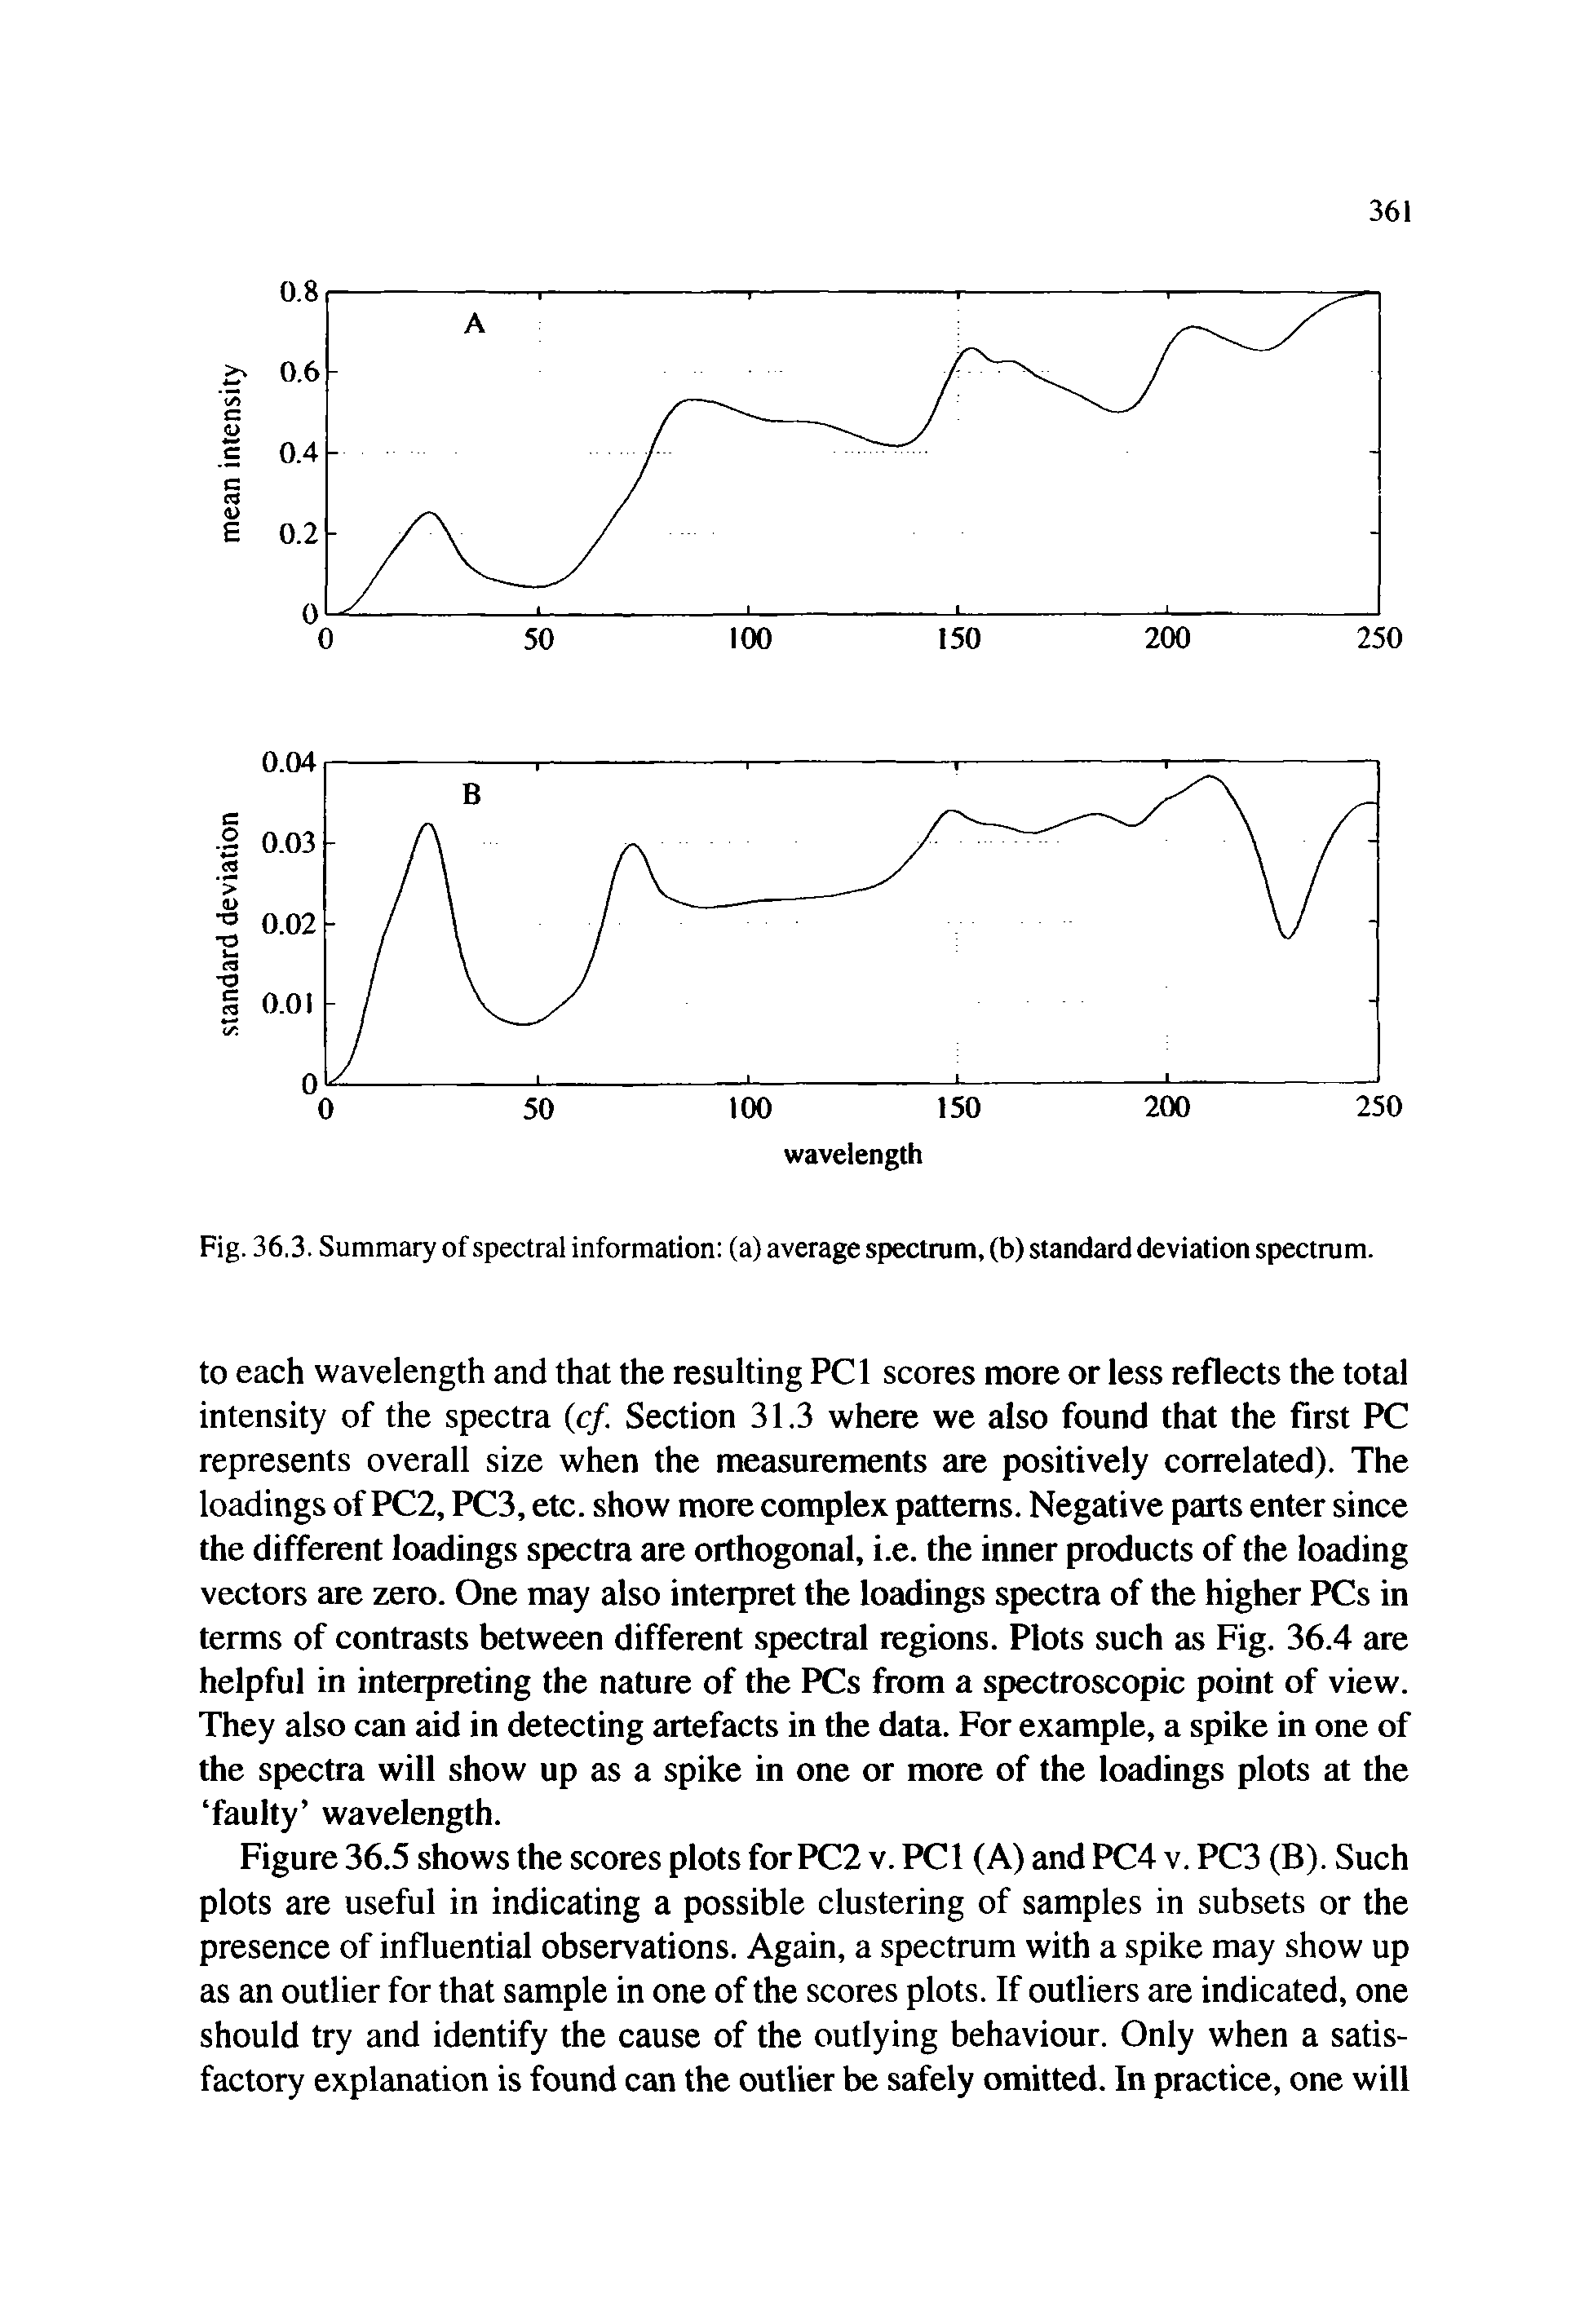 Fig. 36.3. Summary of spectral information (a) average spectrum, (b) standard deviation spectrum.